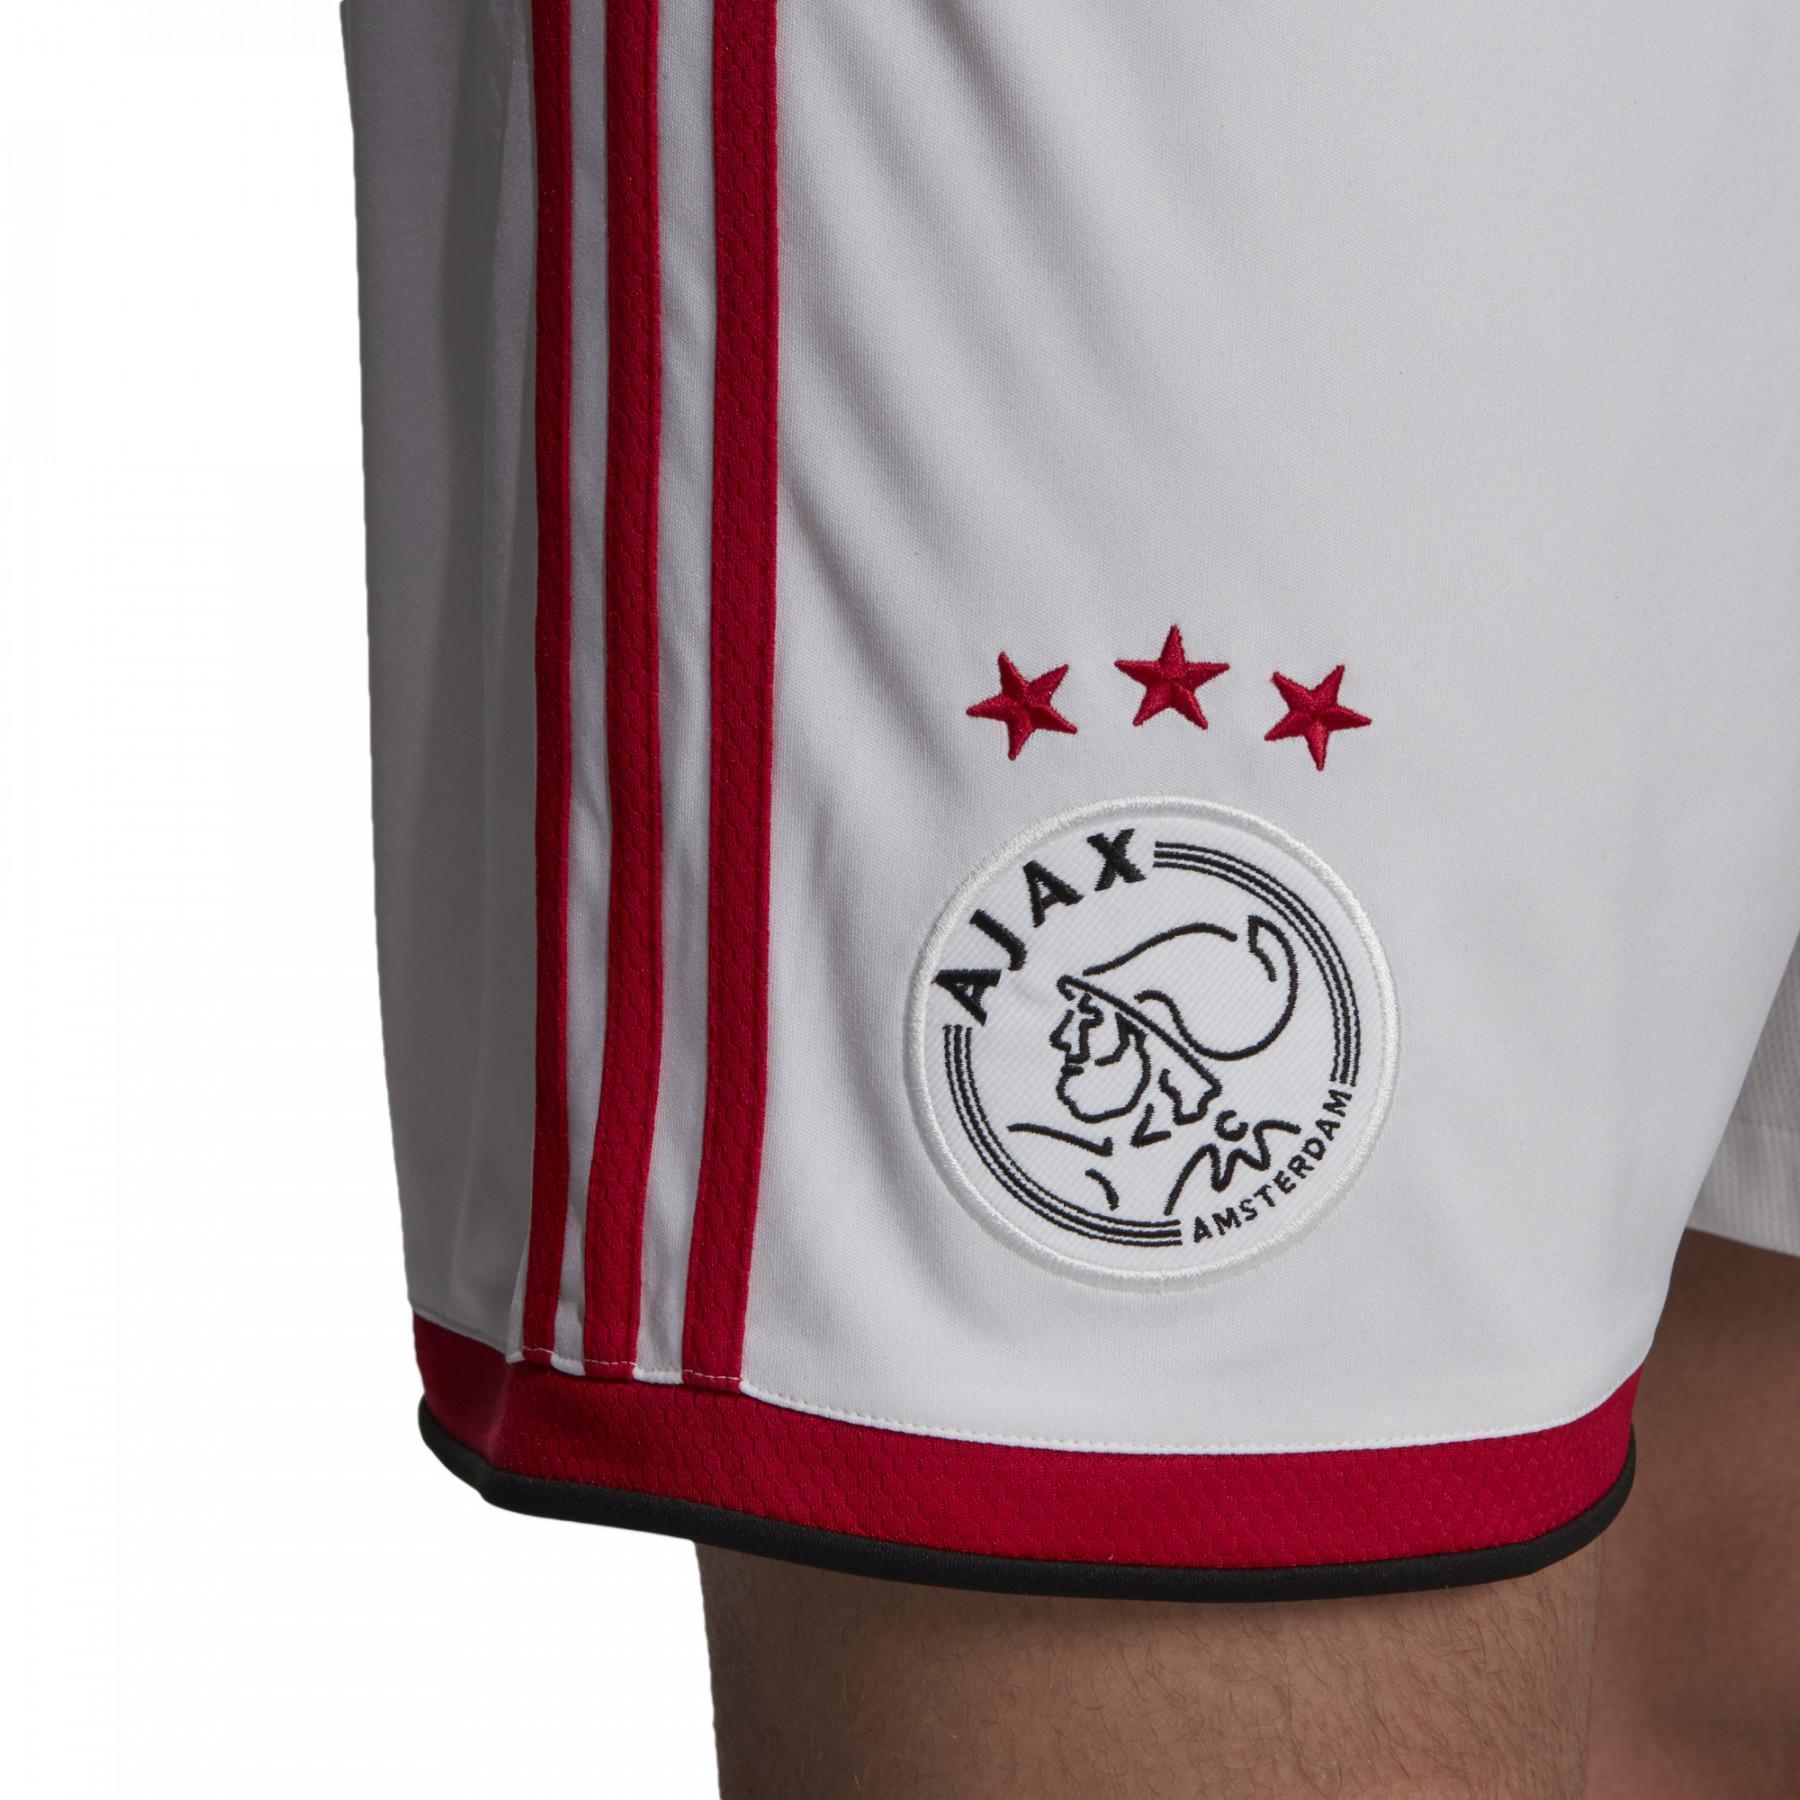 Home shorts Ajax Amsterdam 2019/20